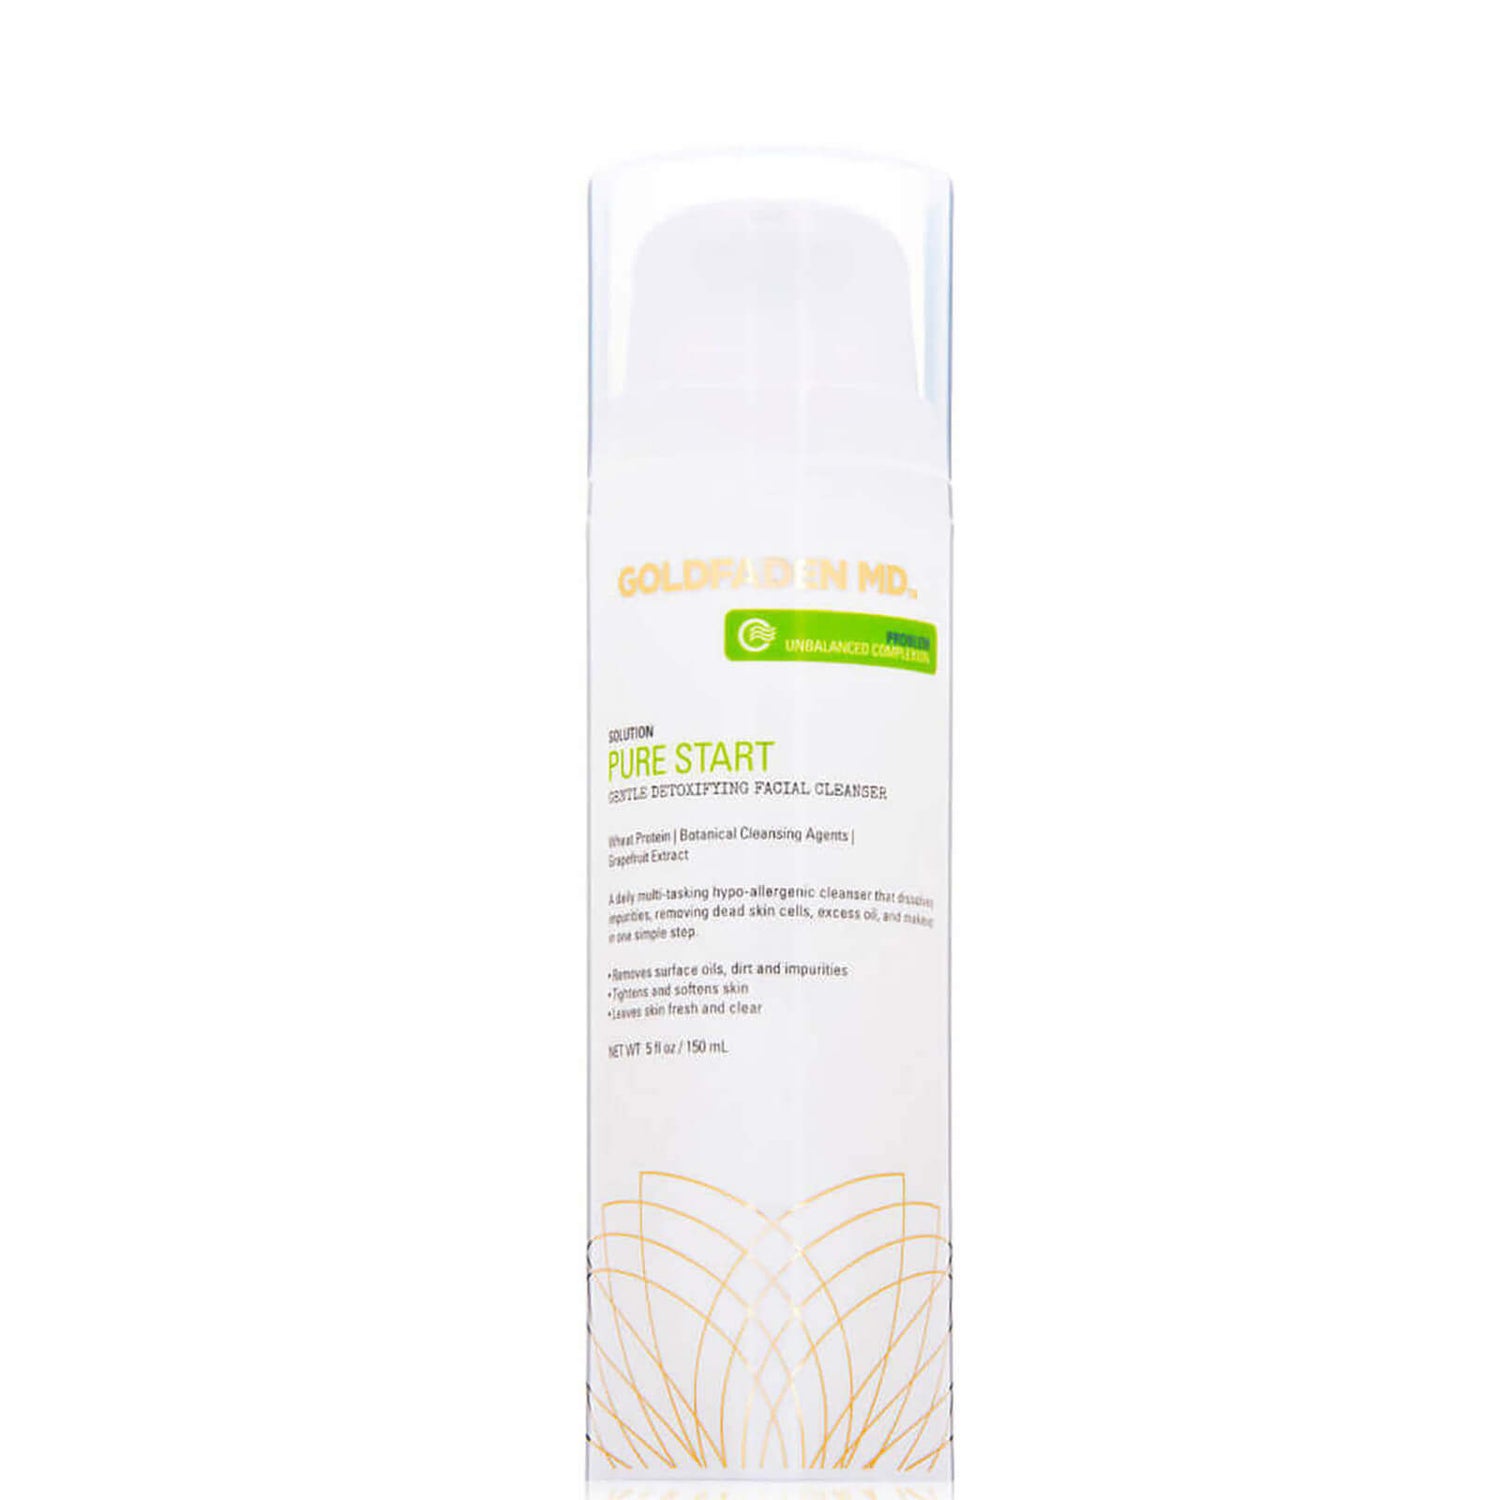 Goldfaden MD Pure Start - Detoxifying Facial Cleanser (5 oz.)